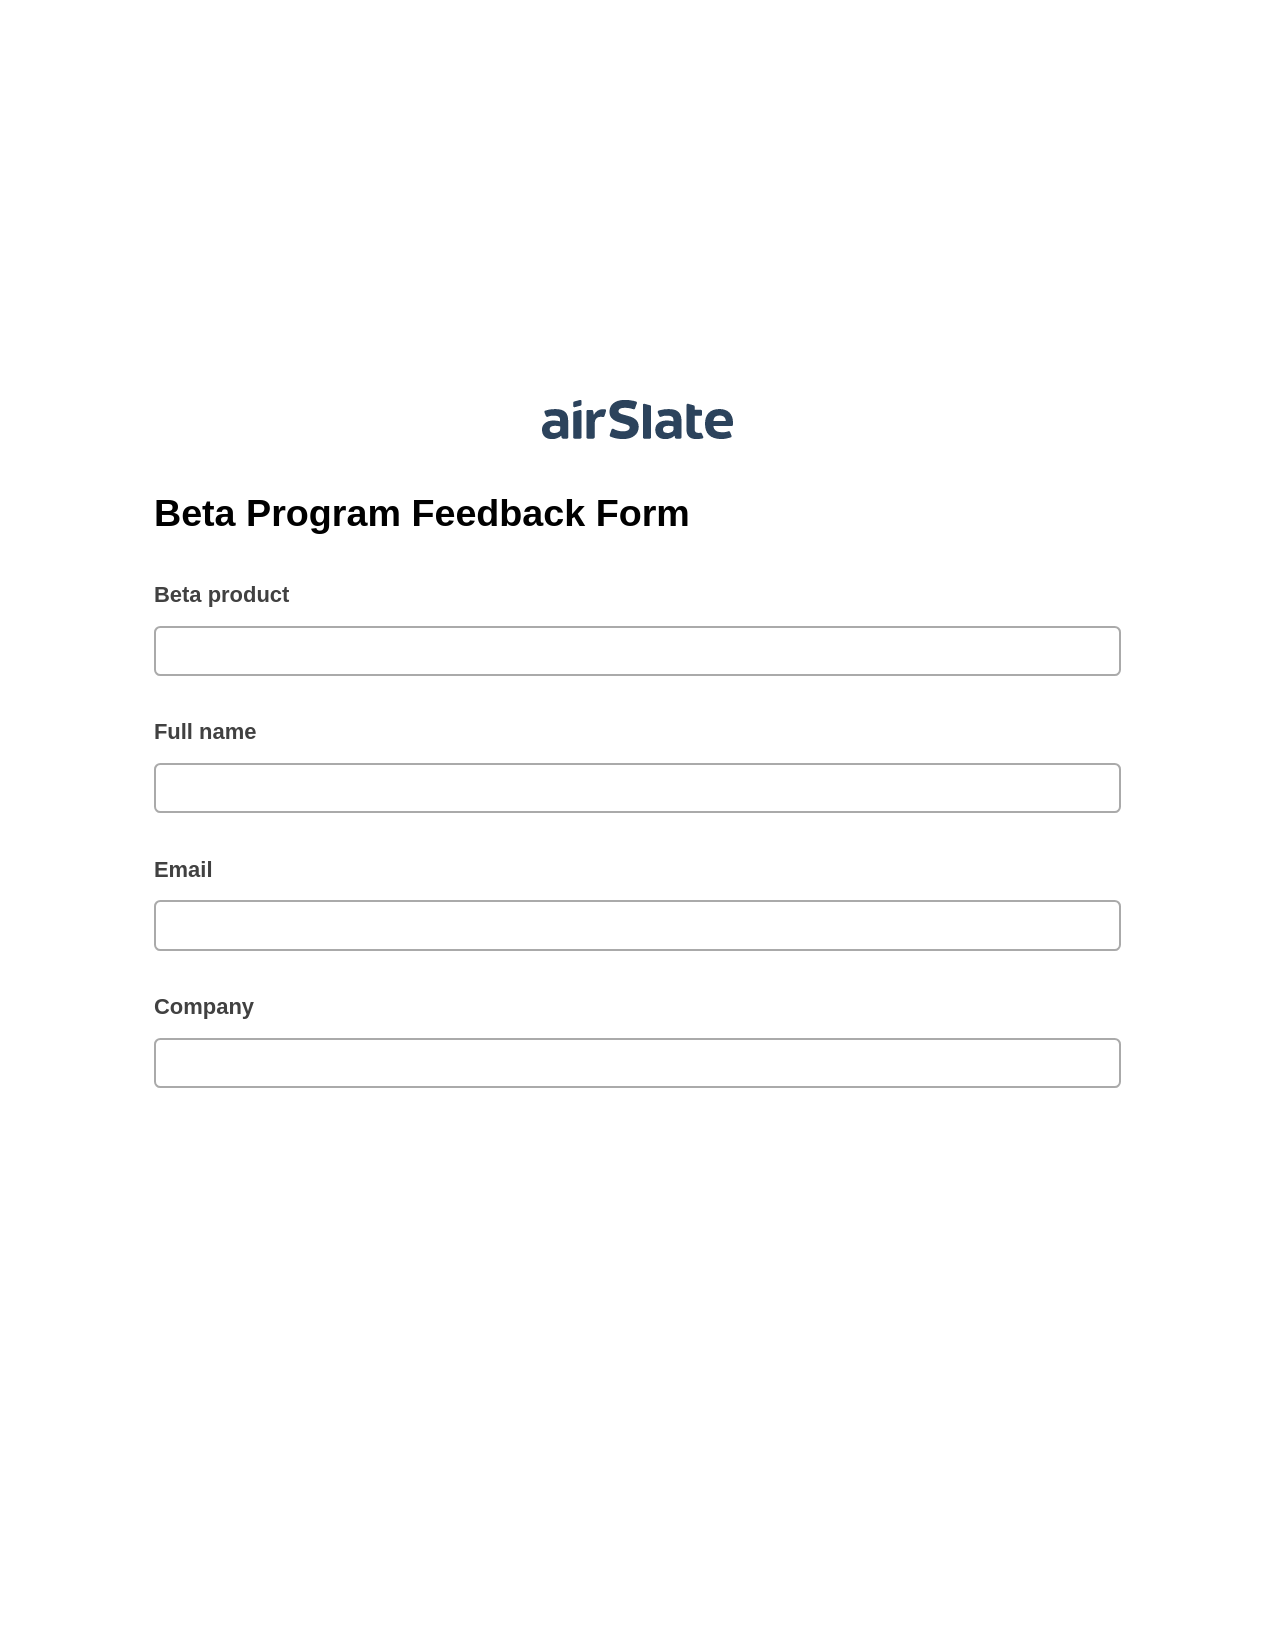 Multirole Beta Program Feedback Form Pre-fill Document Bot, Create slate addon, Email Notification Postfinish Bot